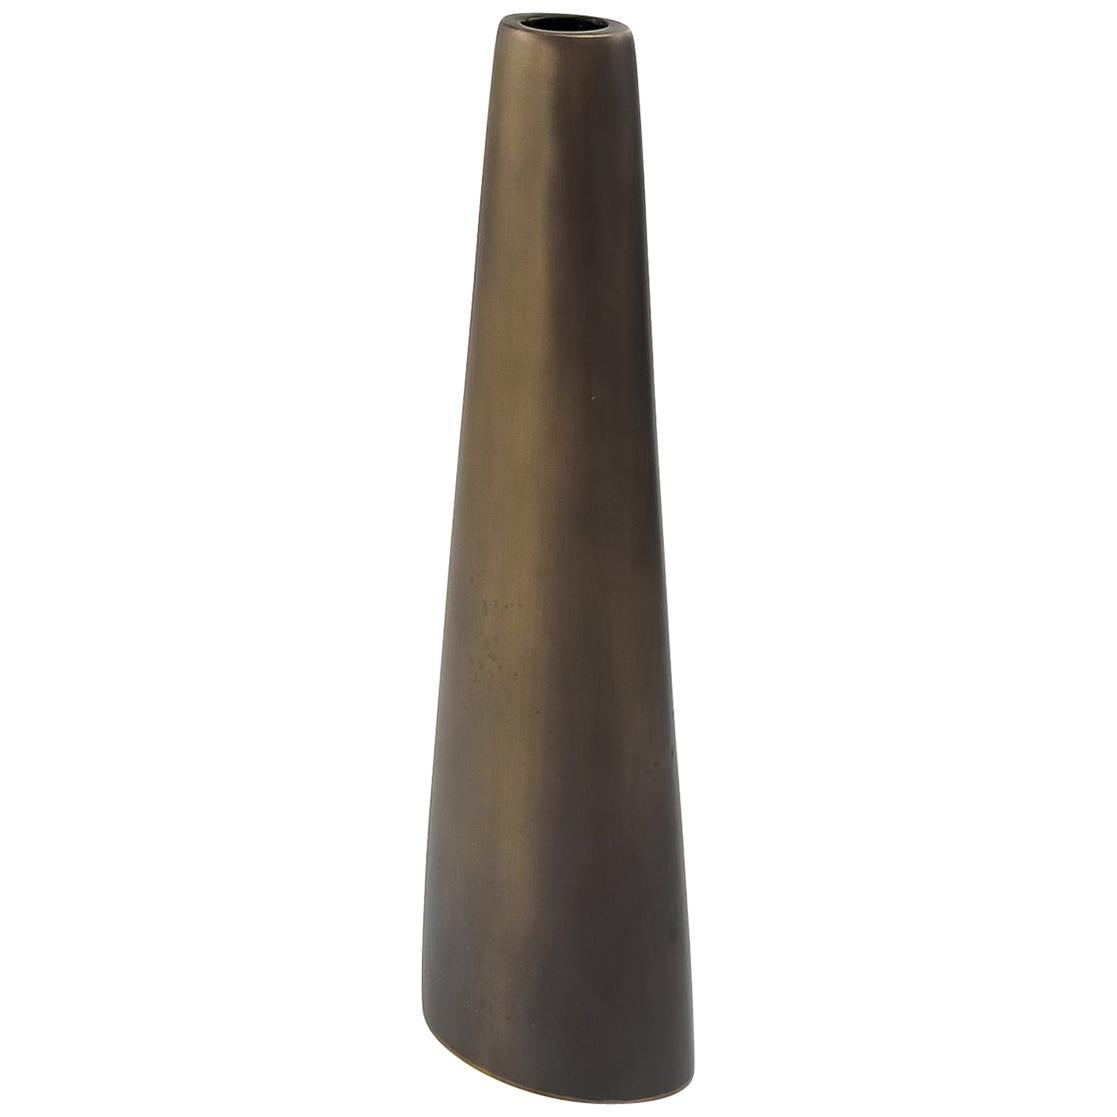 Handcrafted and Dark Cast Bronze Candleholder Vase